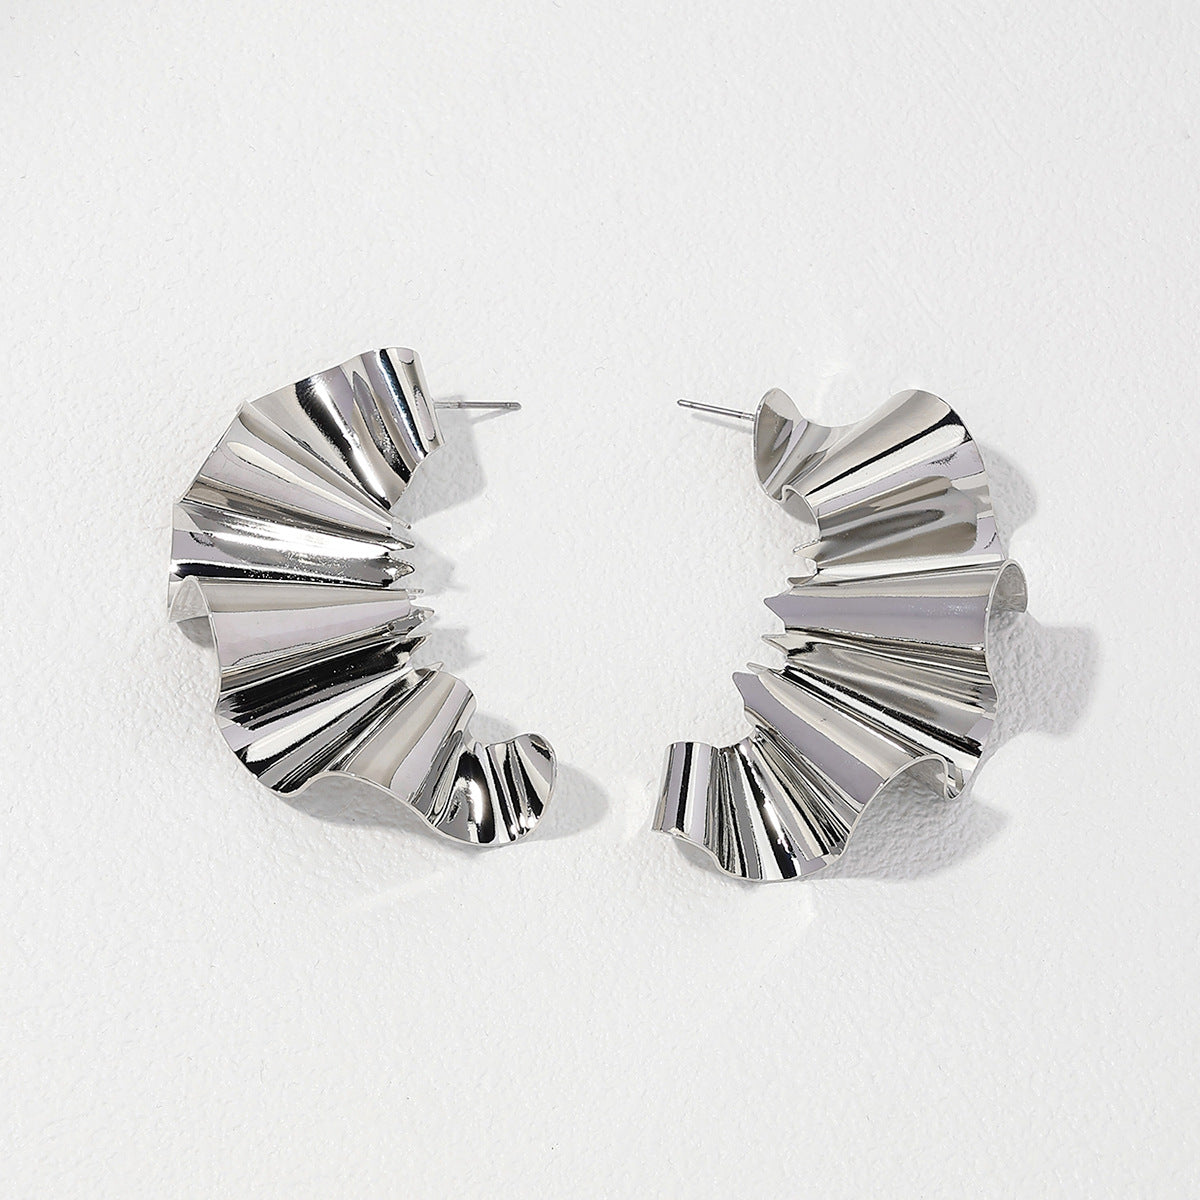 Wrinkle Textured Metal Earrings - Stylish Jewelry for Women